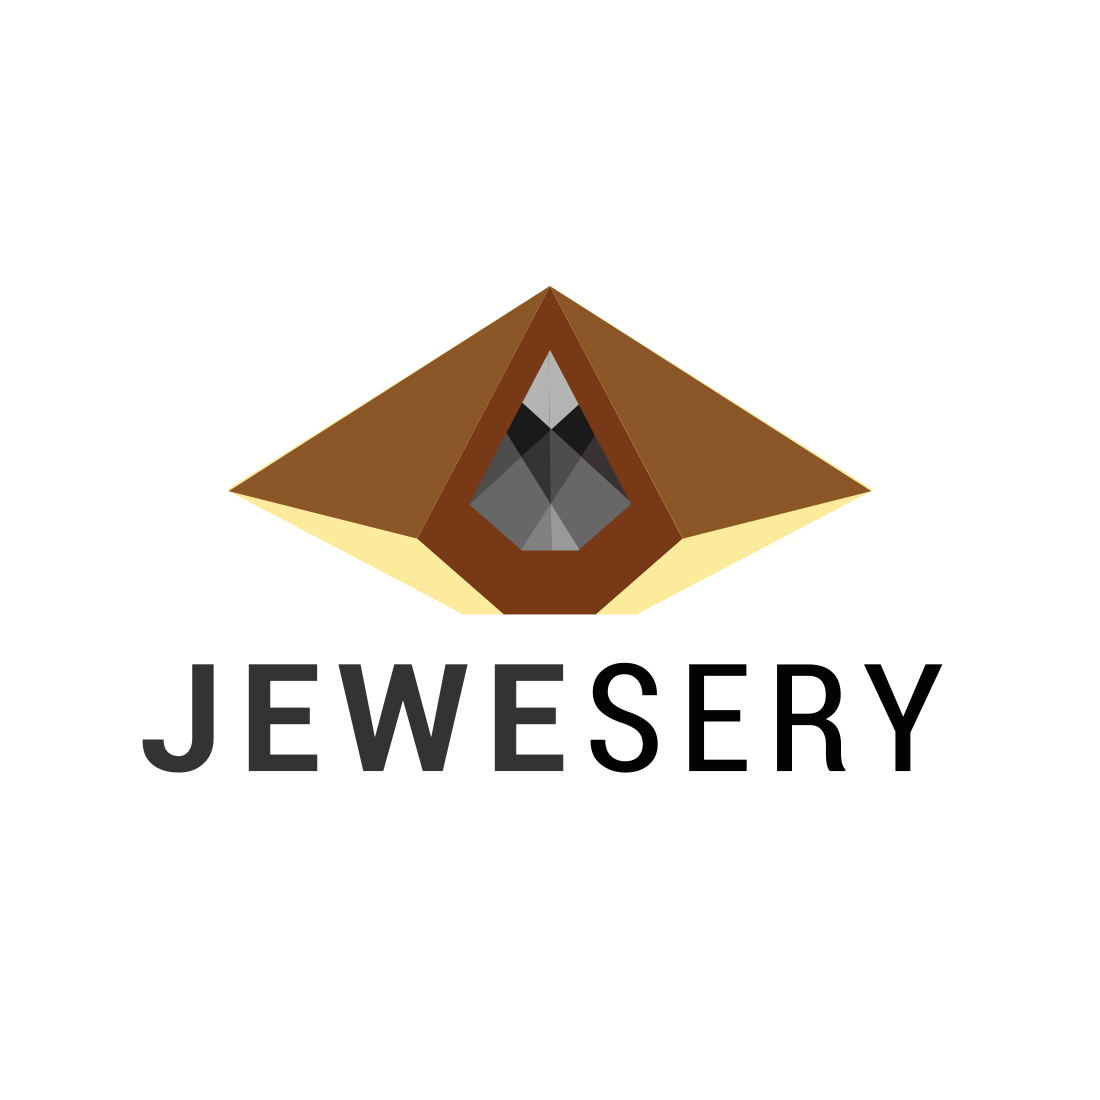 Jewelery shop logo design preview image.